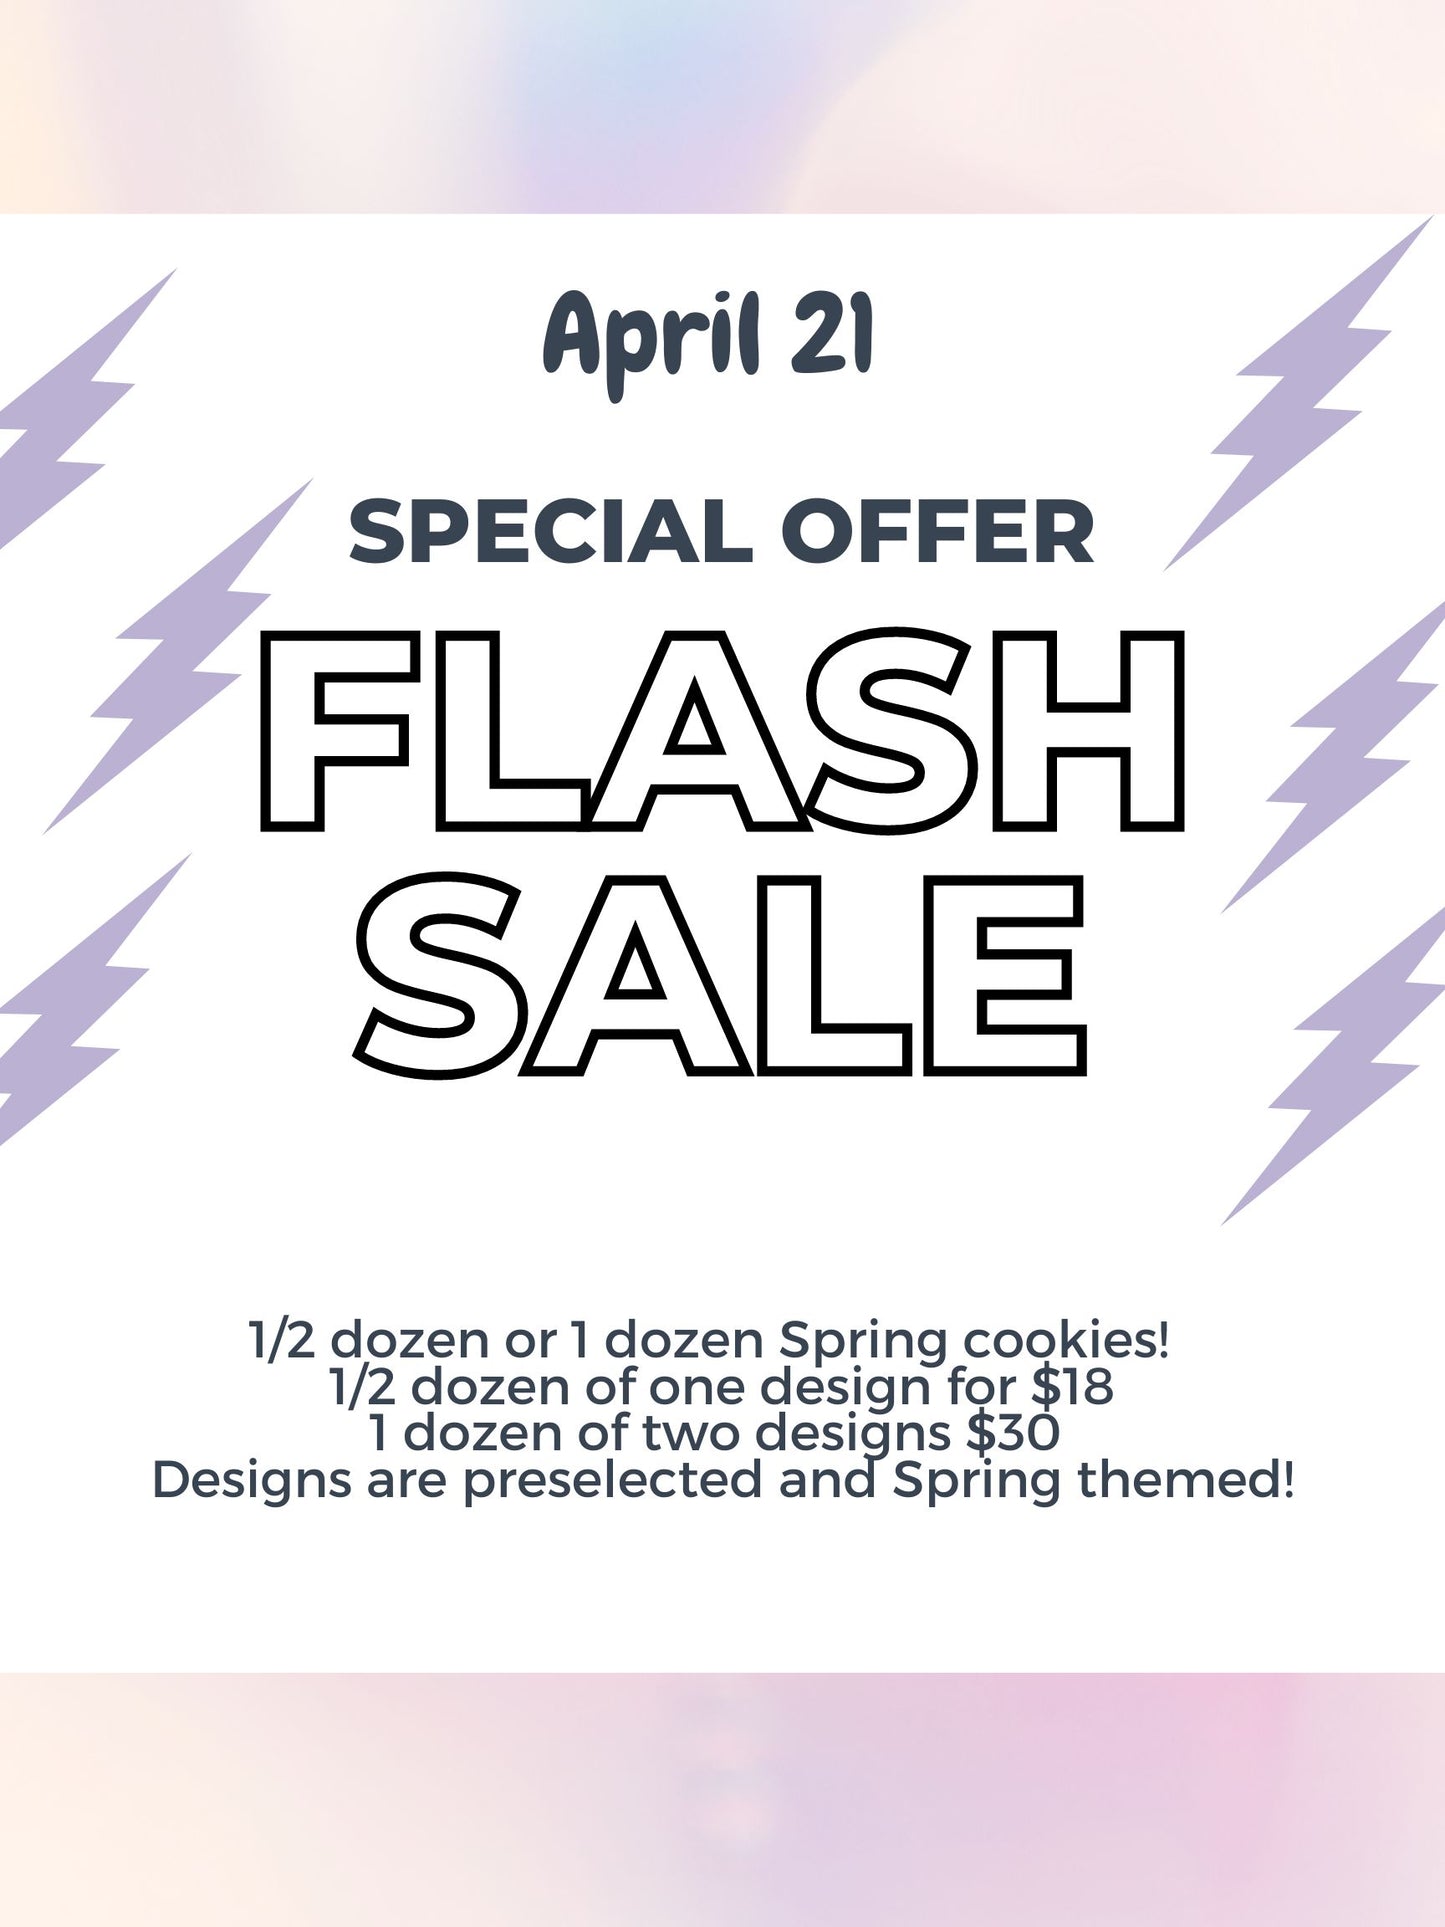 Flash Sale Friday April 21 Promo